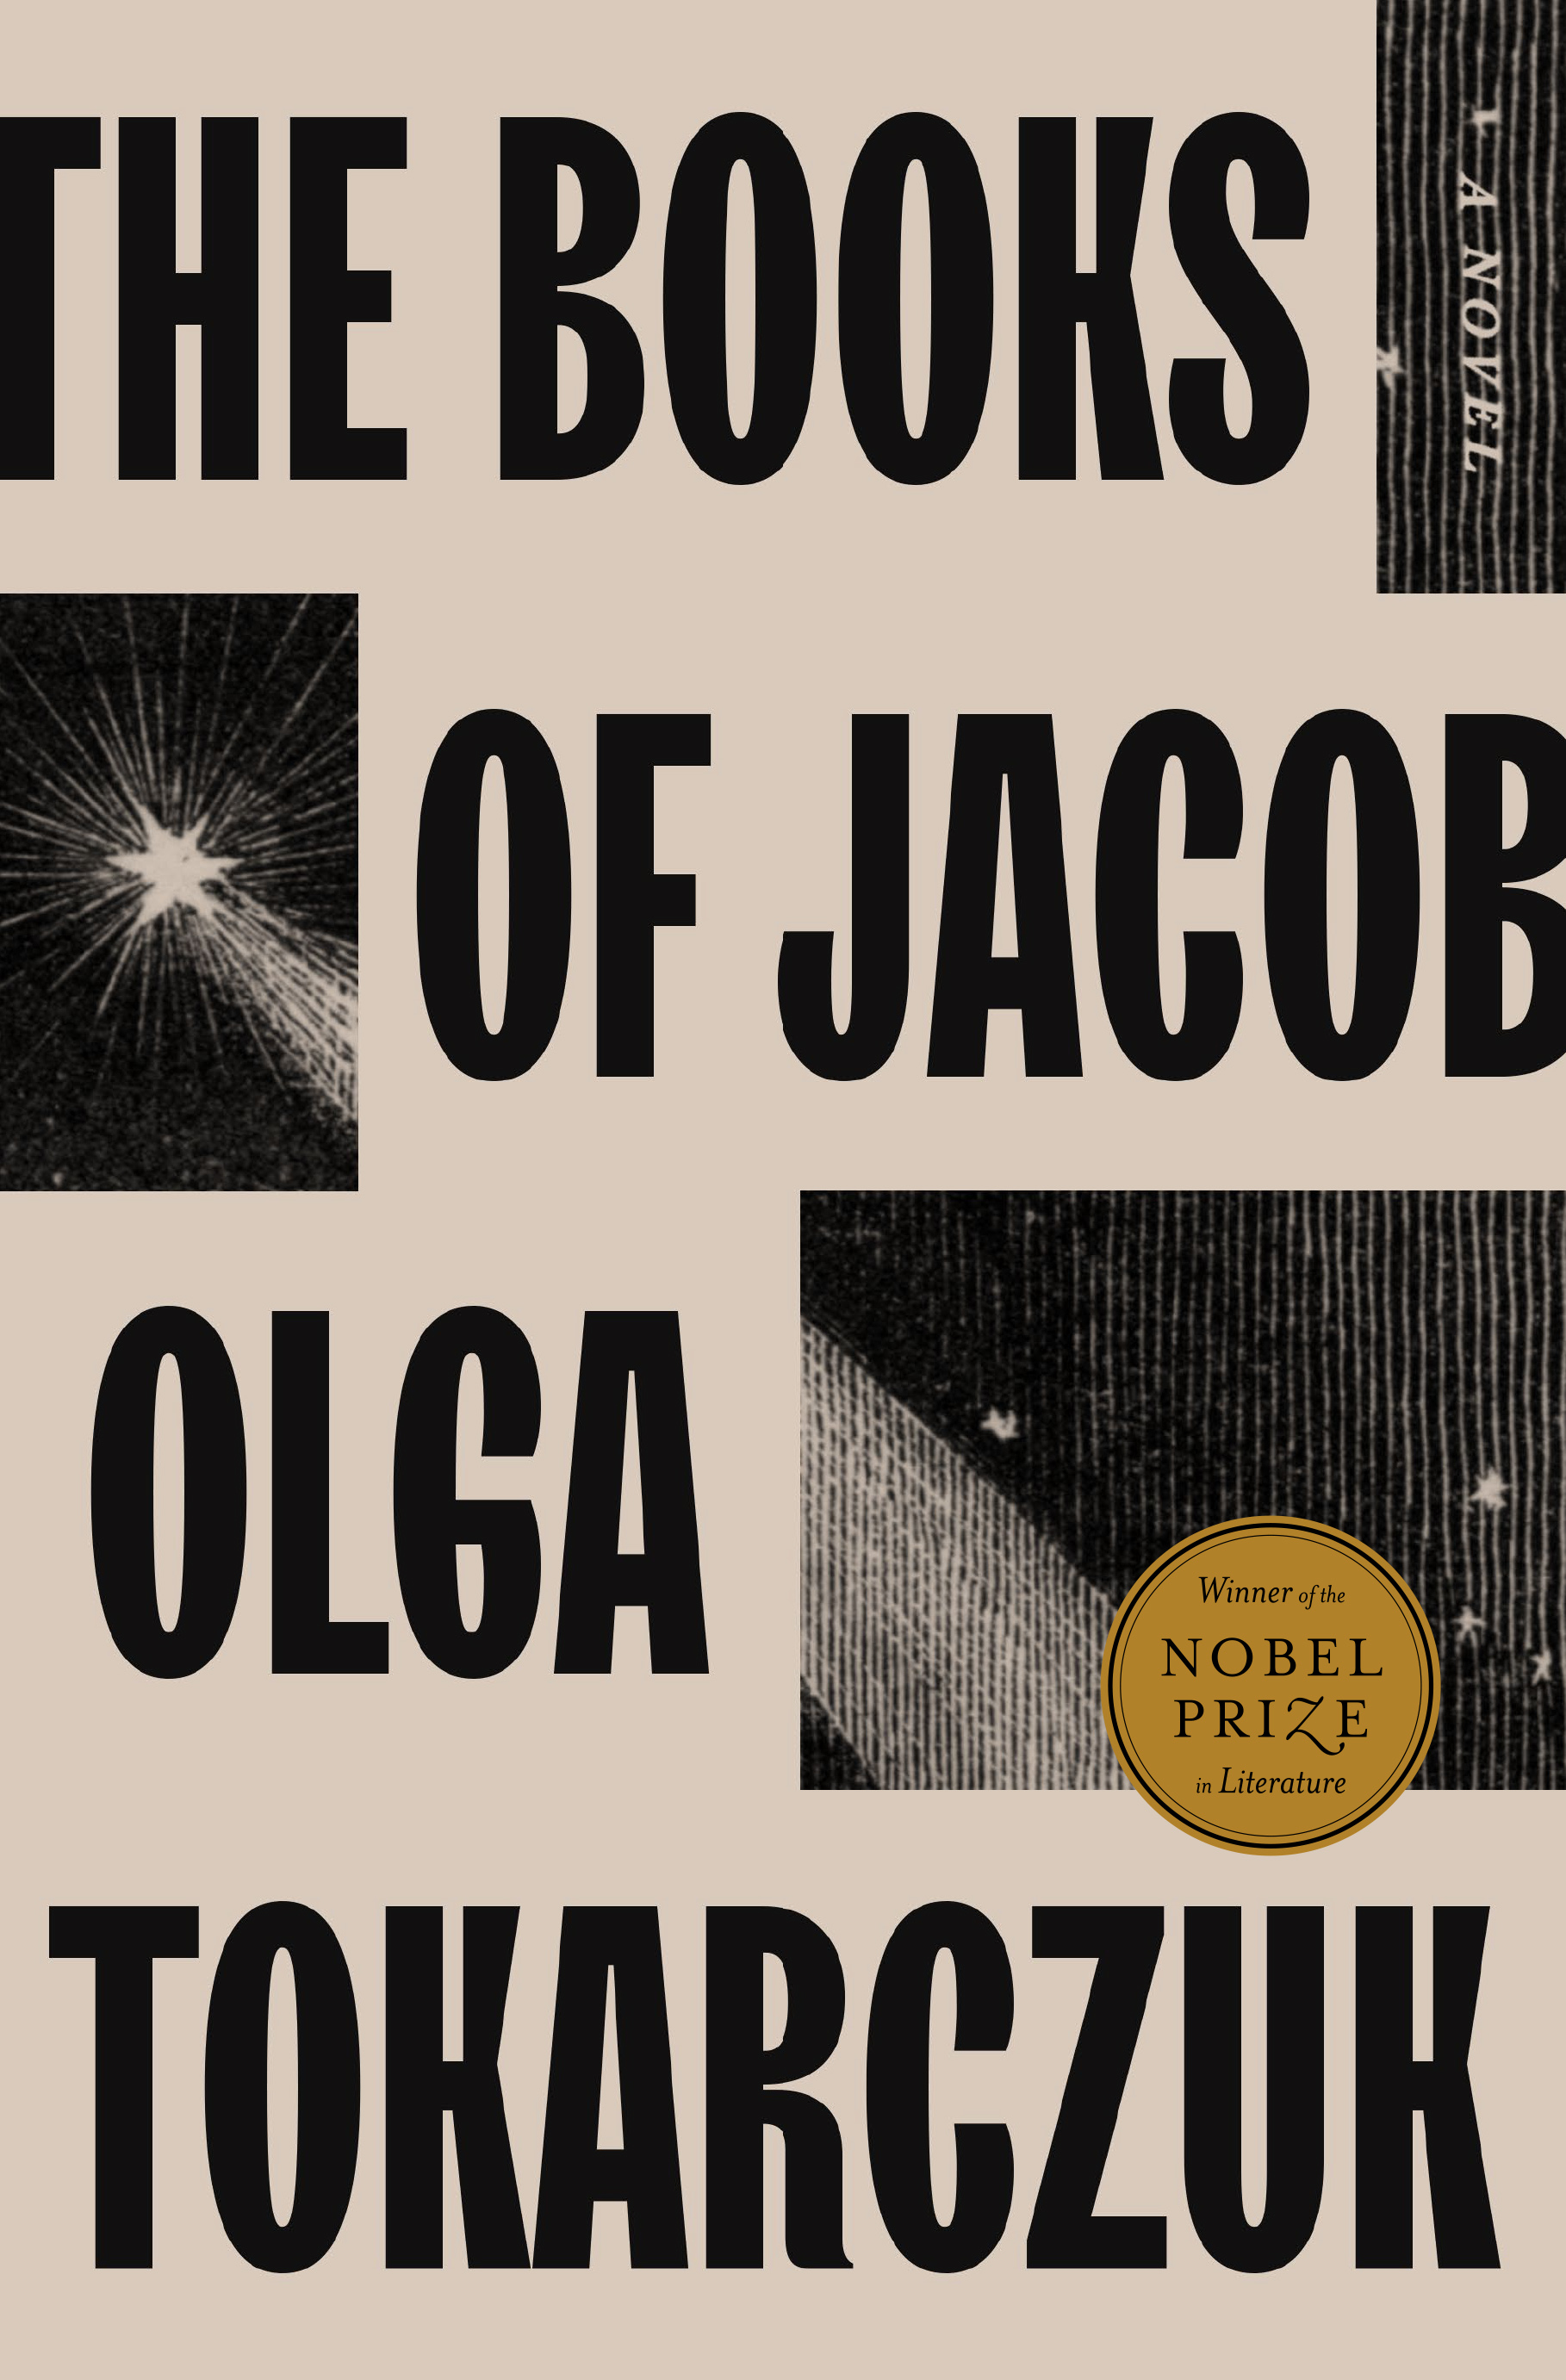 the book of jacob novel